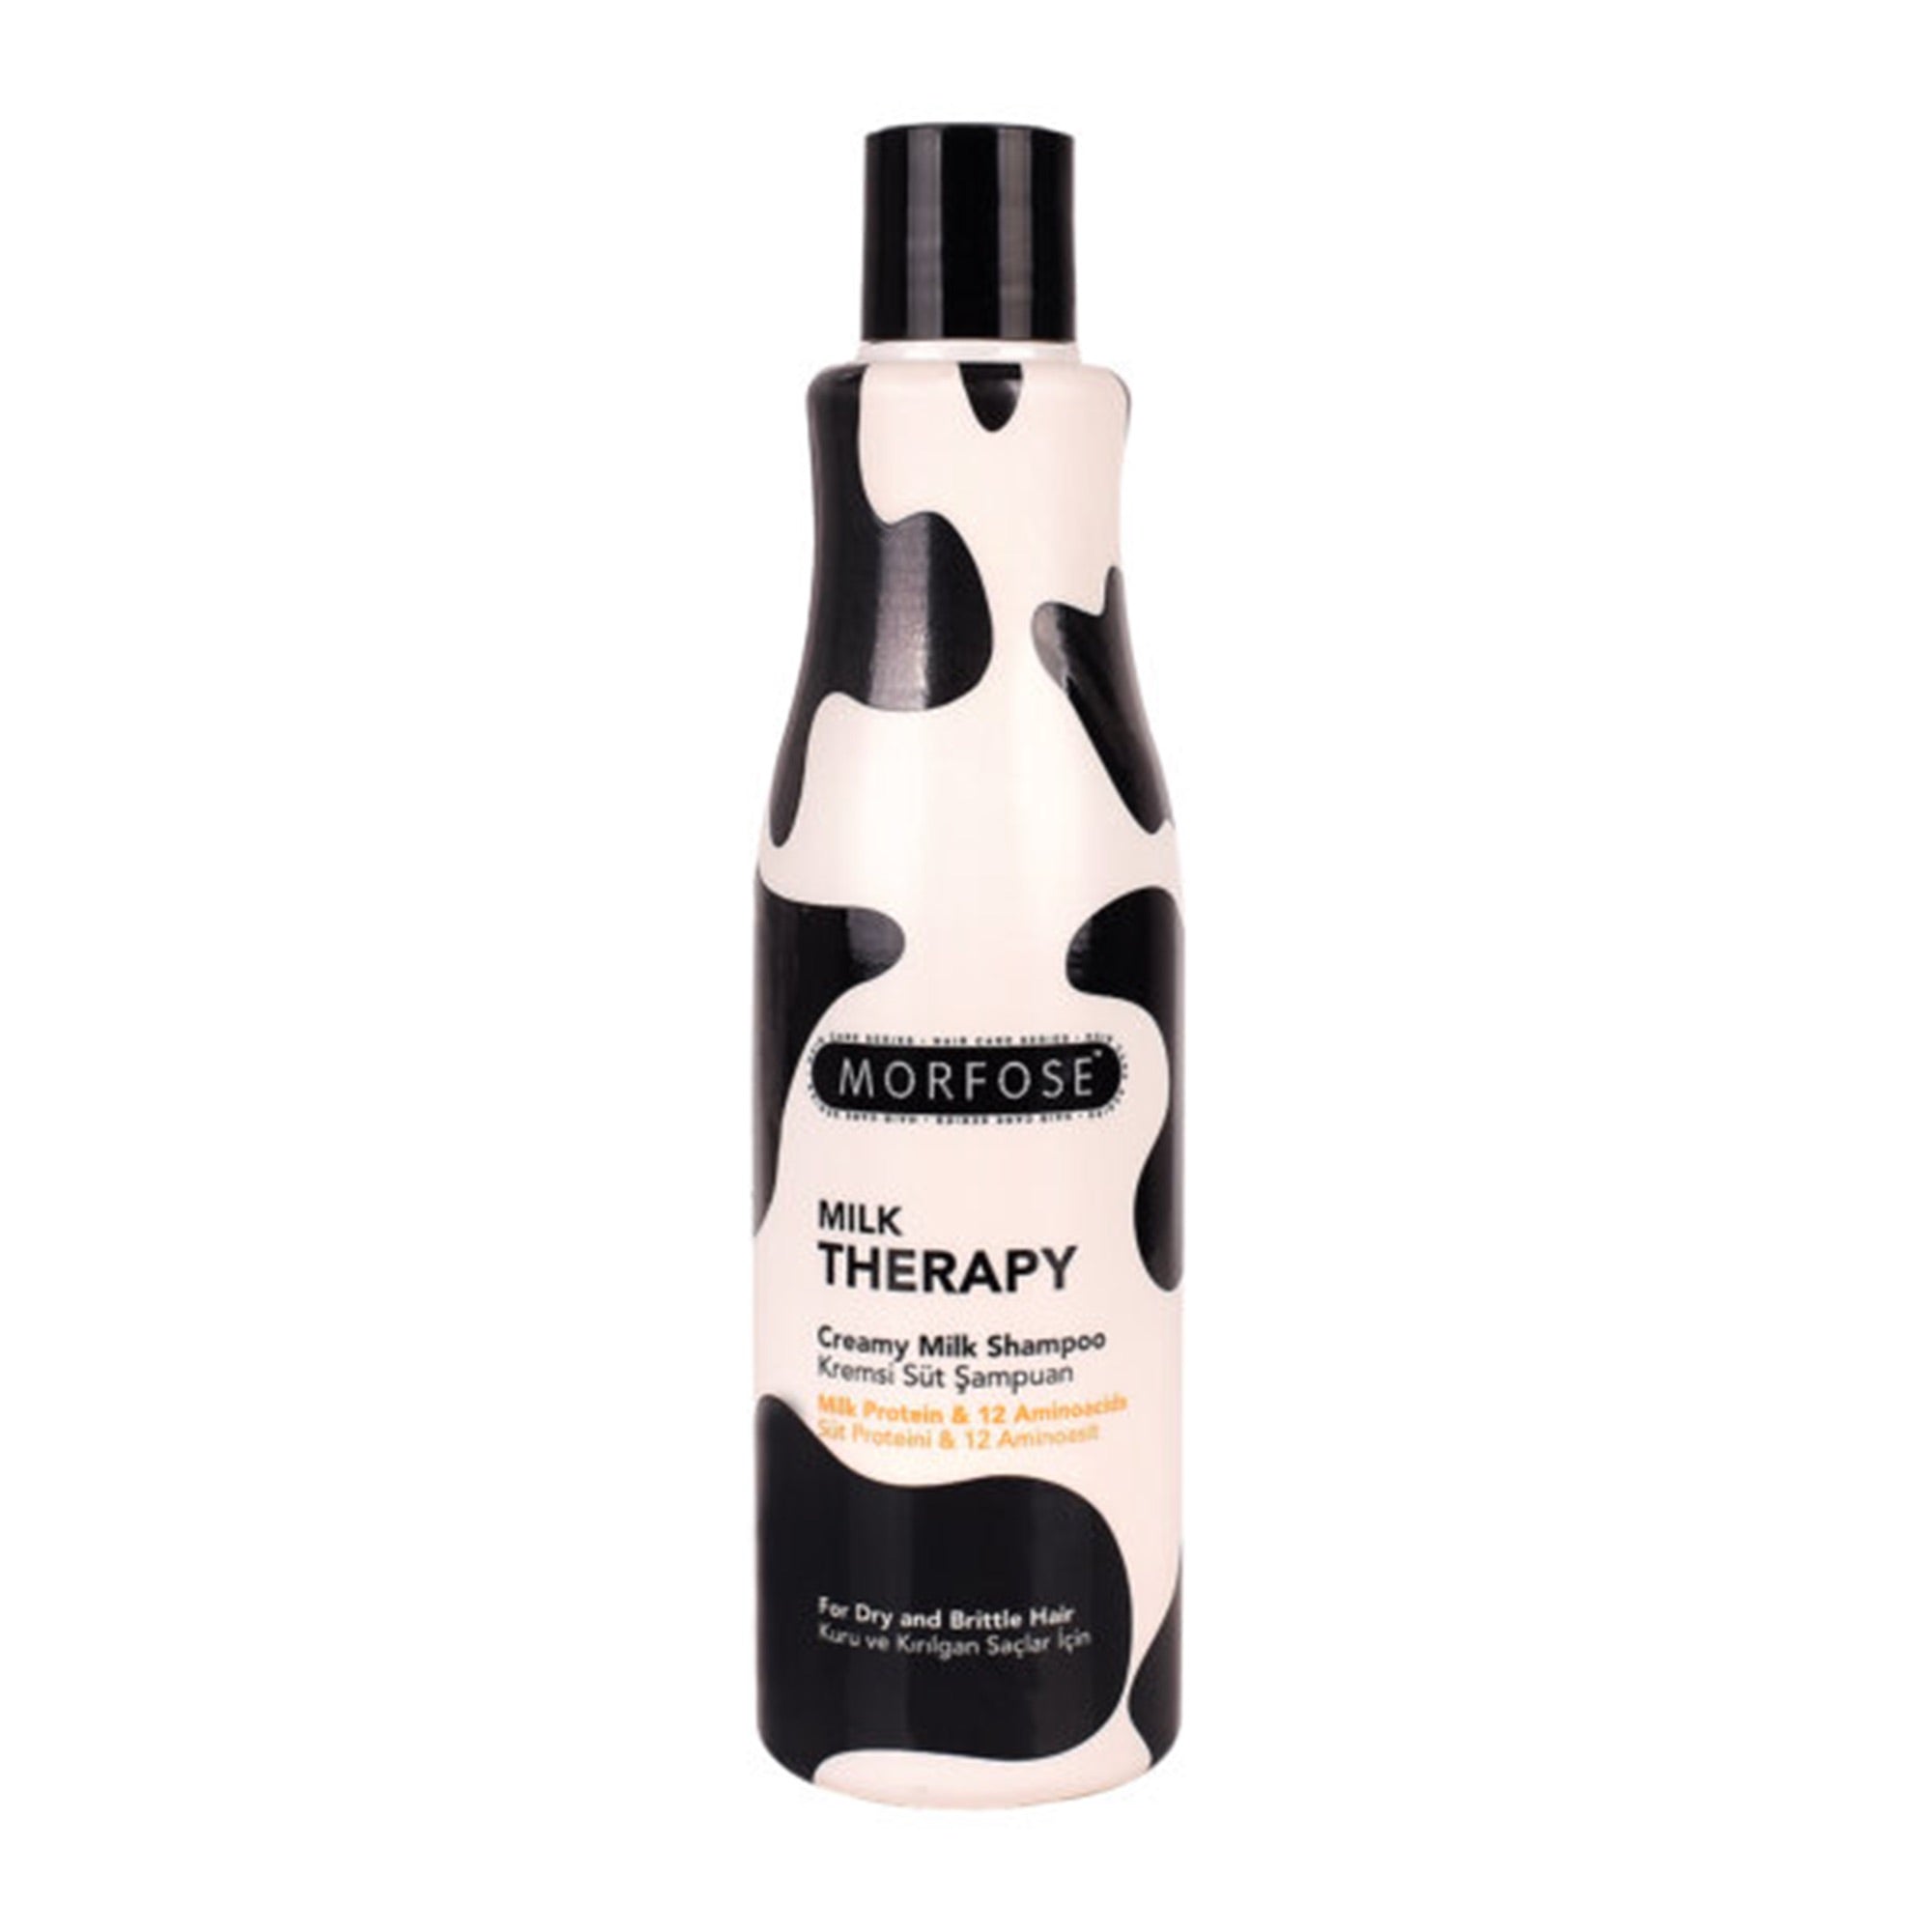 Morfose - Milk Therapy Creamy Milk Shampoo 500ml